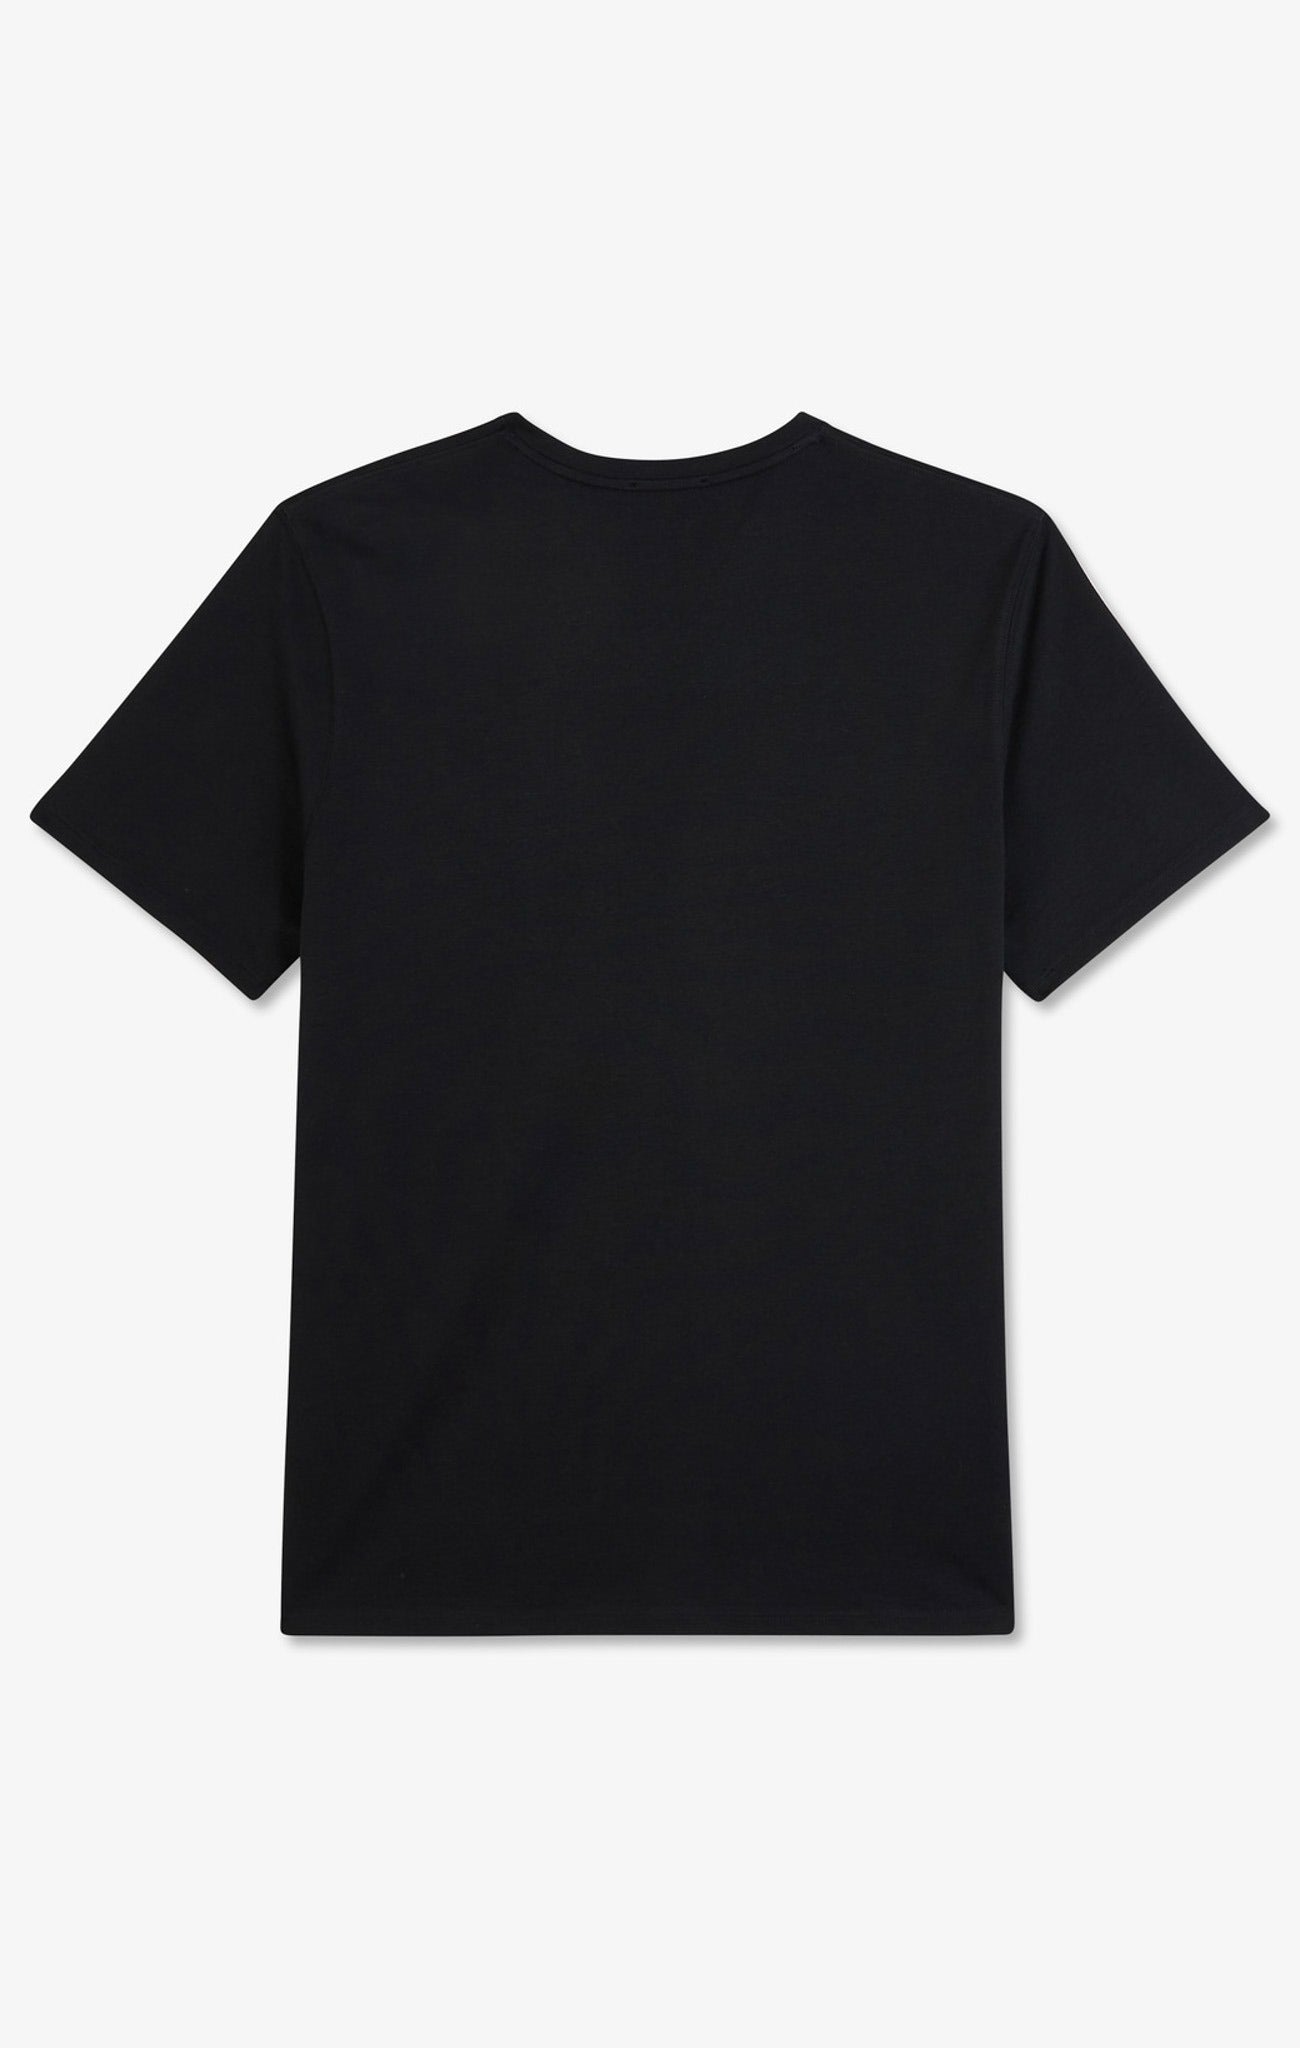 Crew neck black pima cotton t-shirt - Image 5